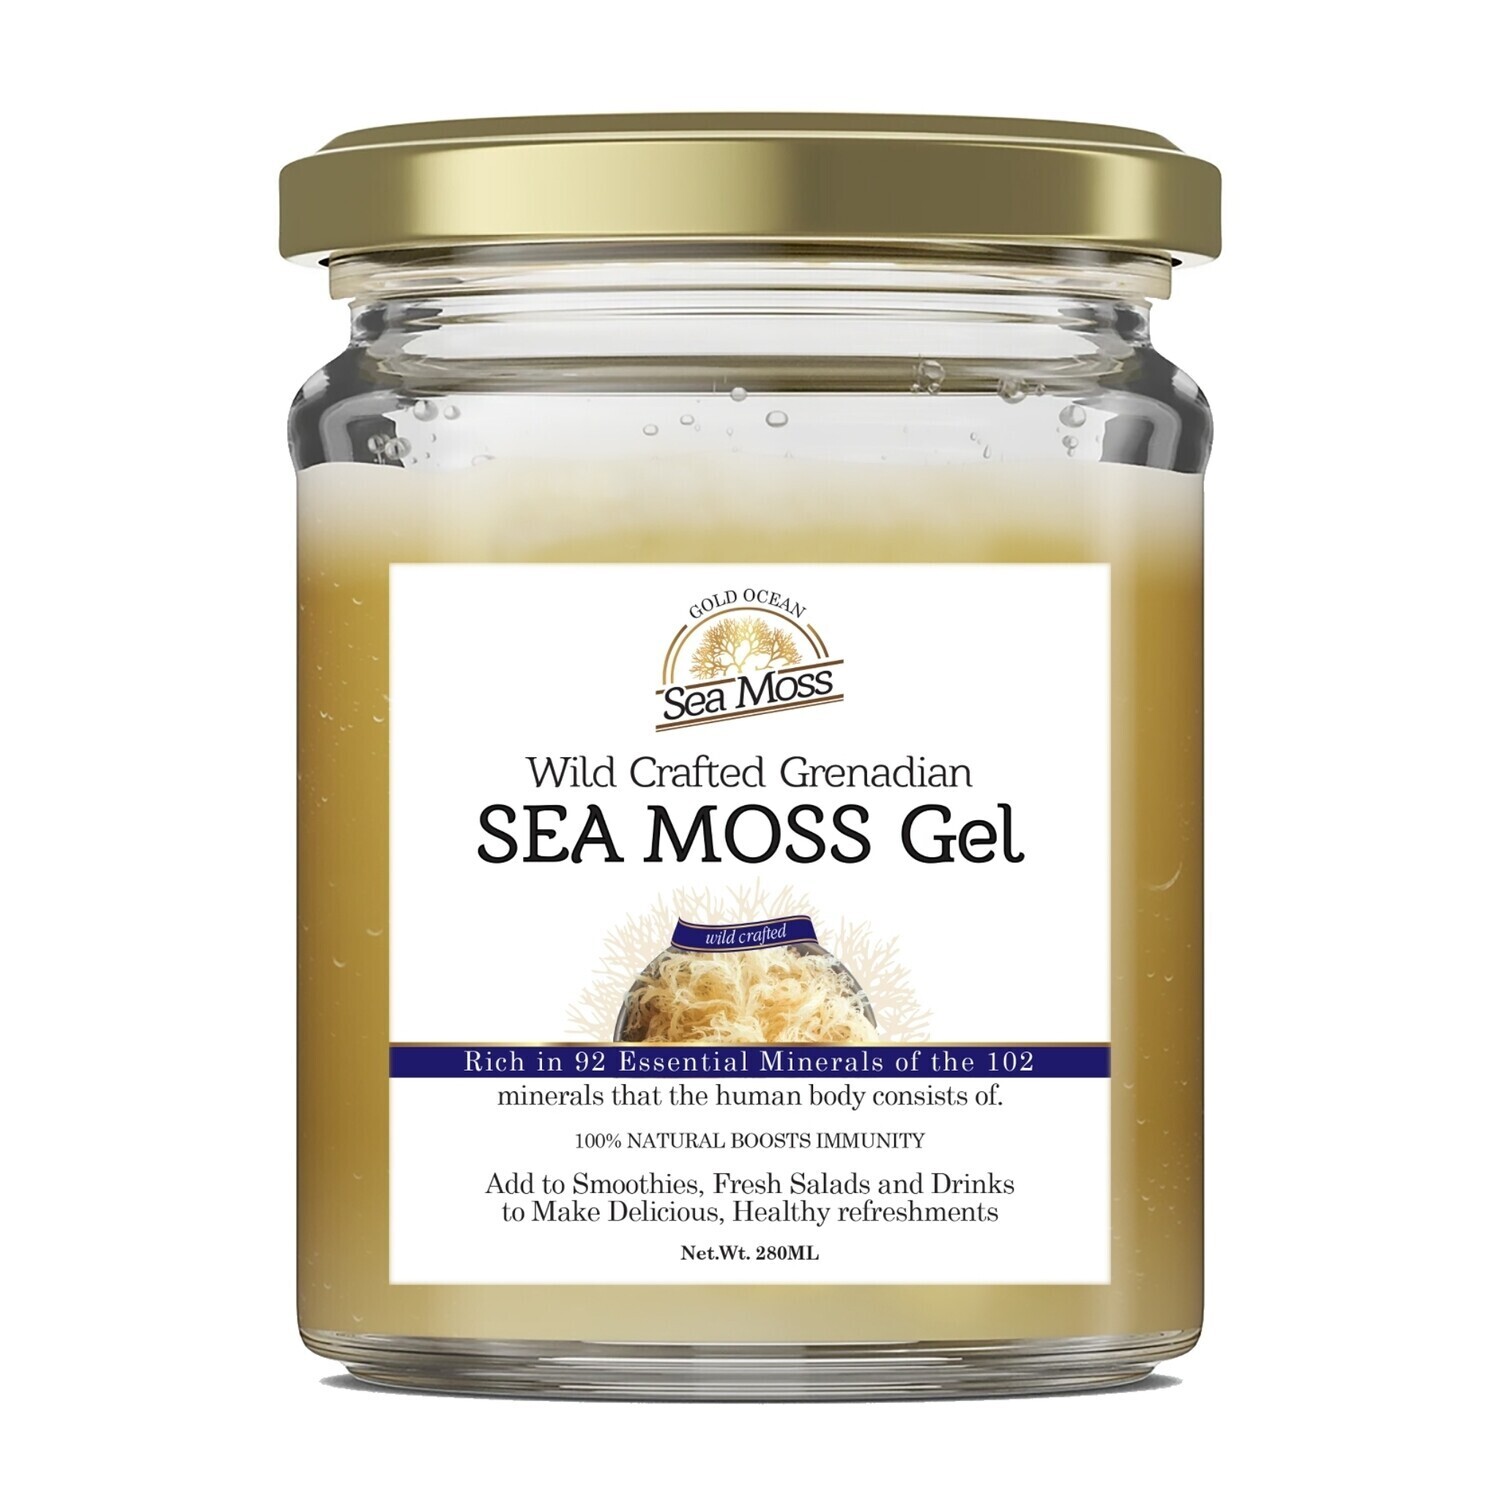 Grenadian Sea Moss Gel MANHOOD BOOSTER 280ml